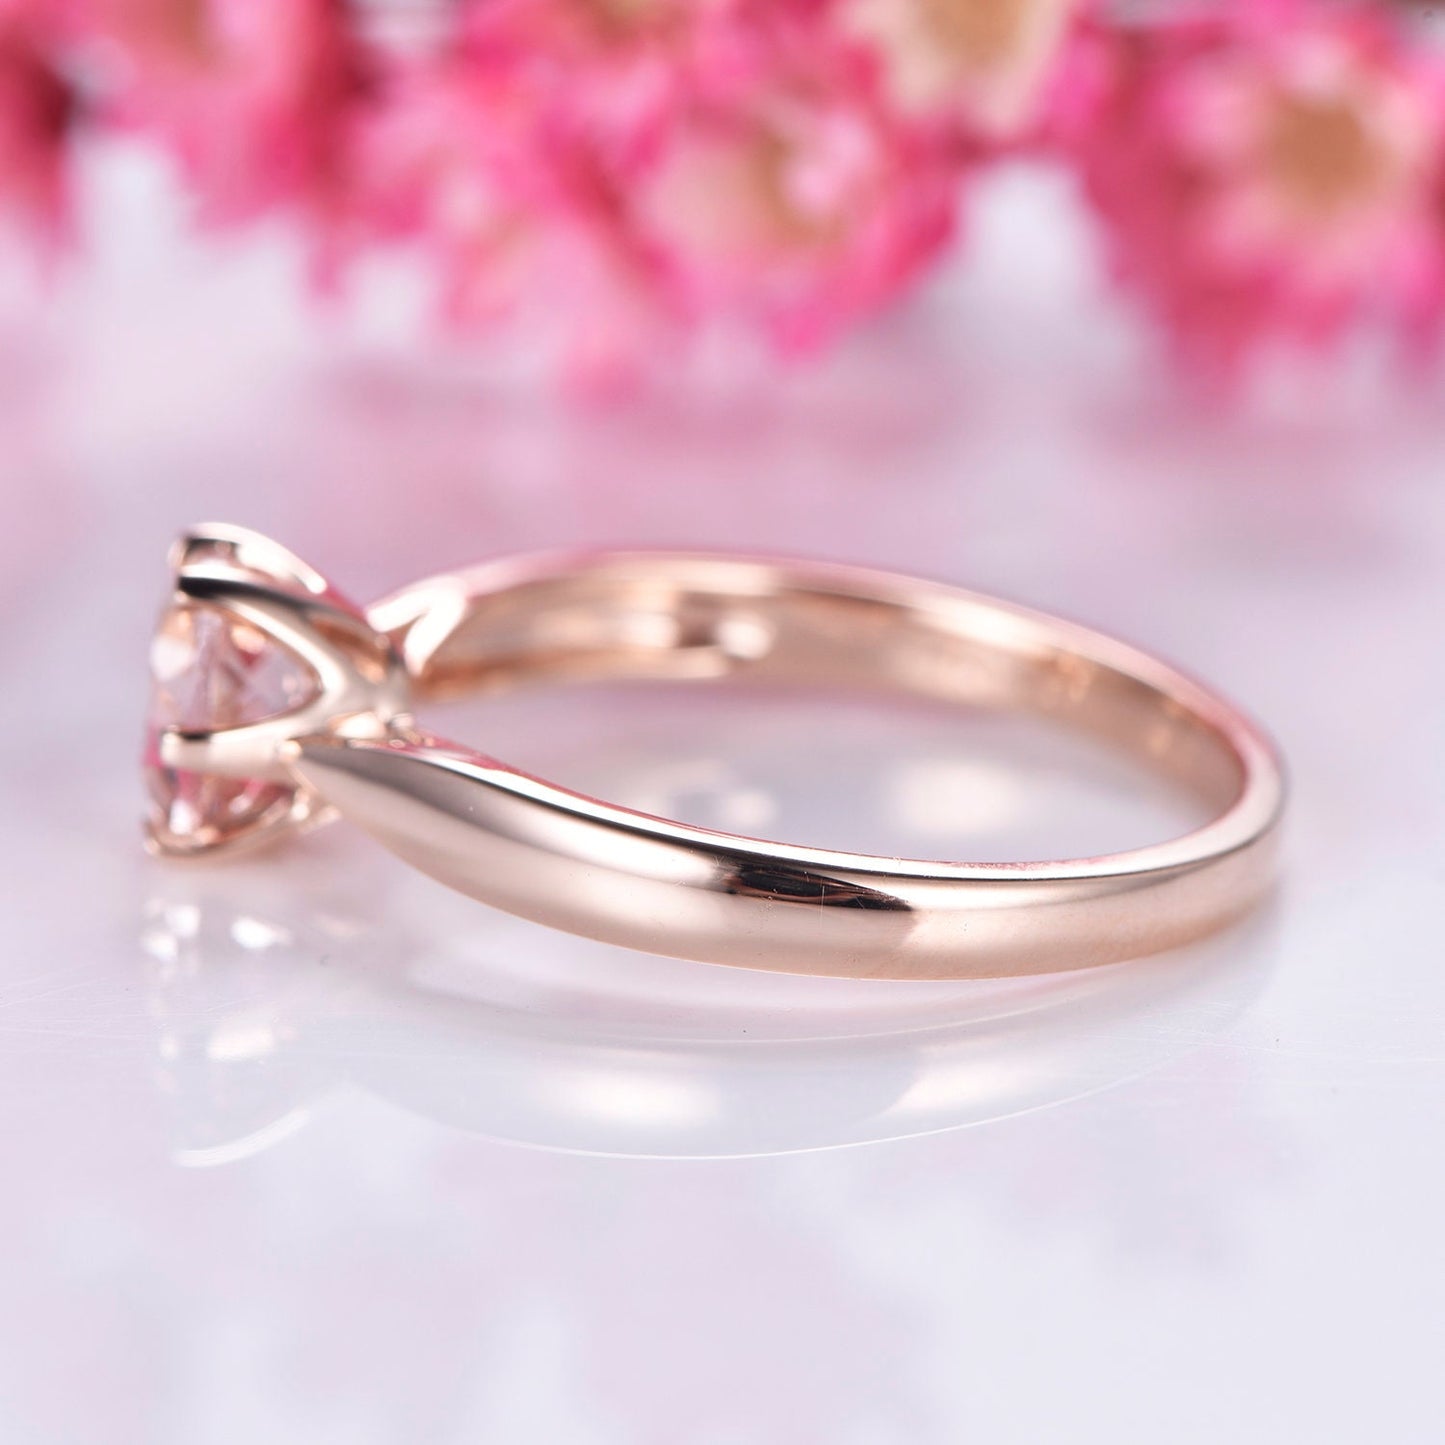 Morganite engagement ring rose gold plain band 14k solitaire gemstone ring 6.5mm round cut natural morganite six prongs set Valentine